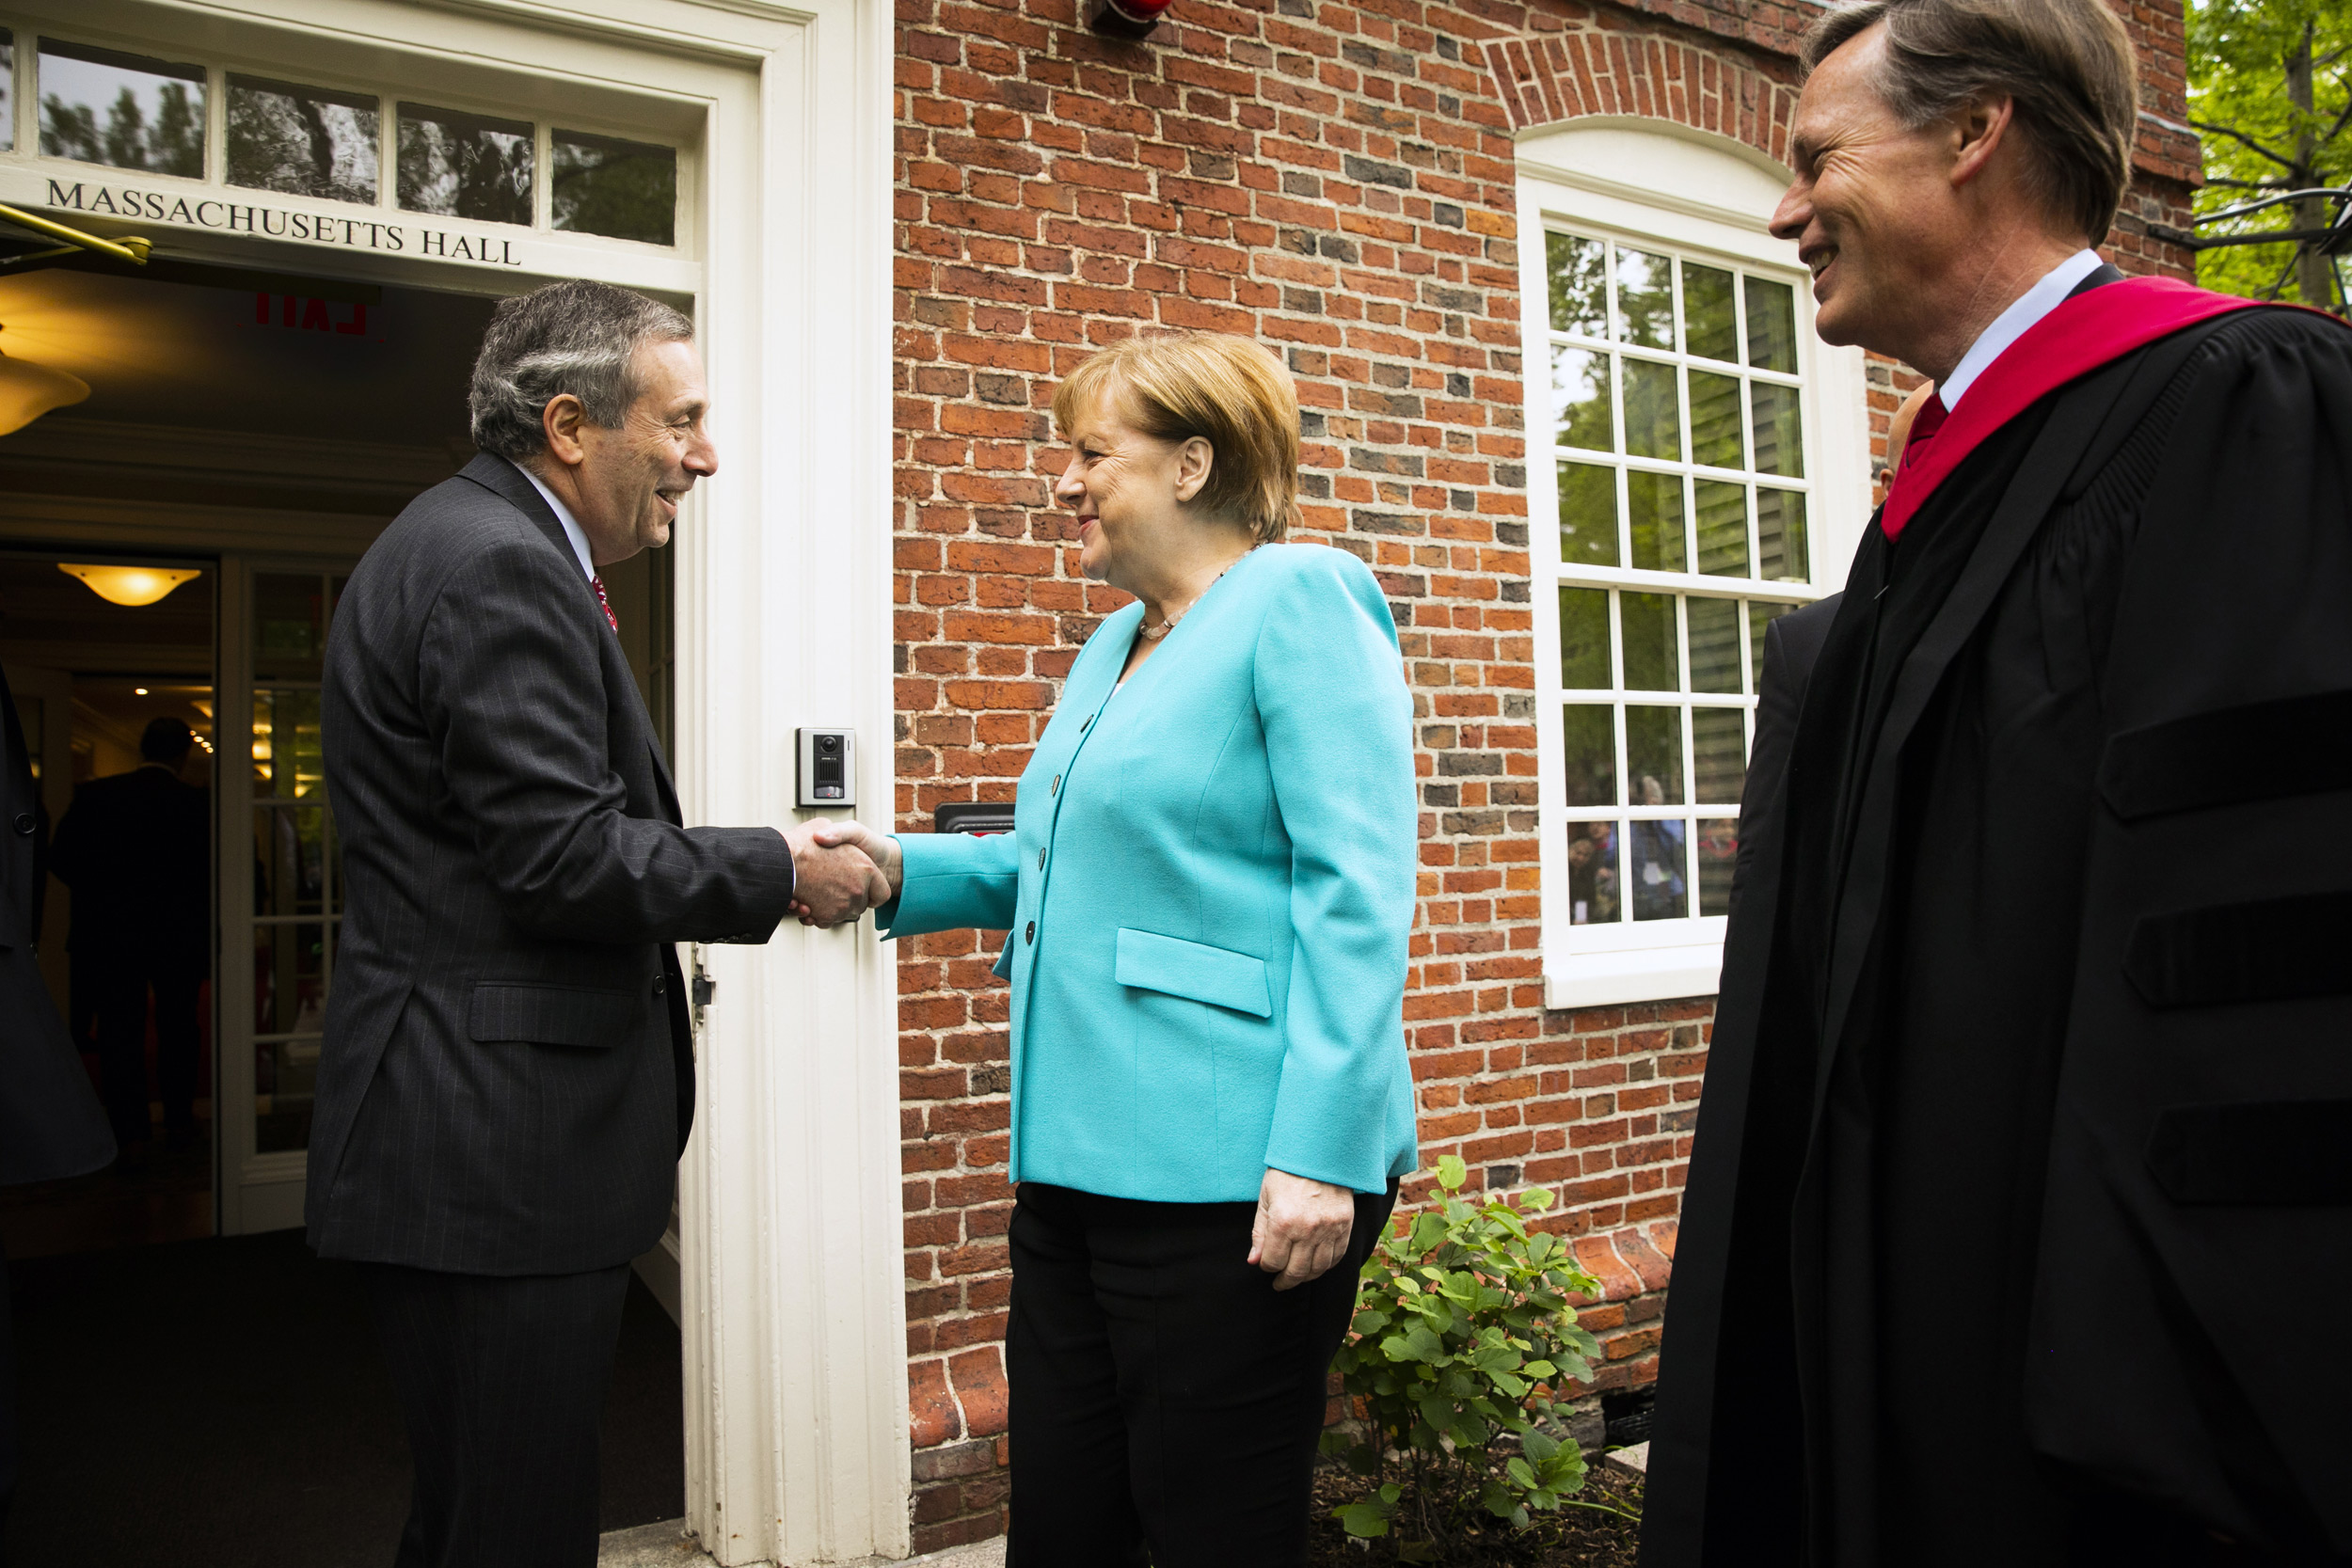 Bacow welcomed German Chancellor Angela Merkel, the 2019 Commencement speaker, to Massachusetts Hall.